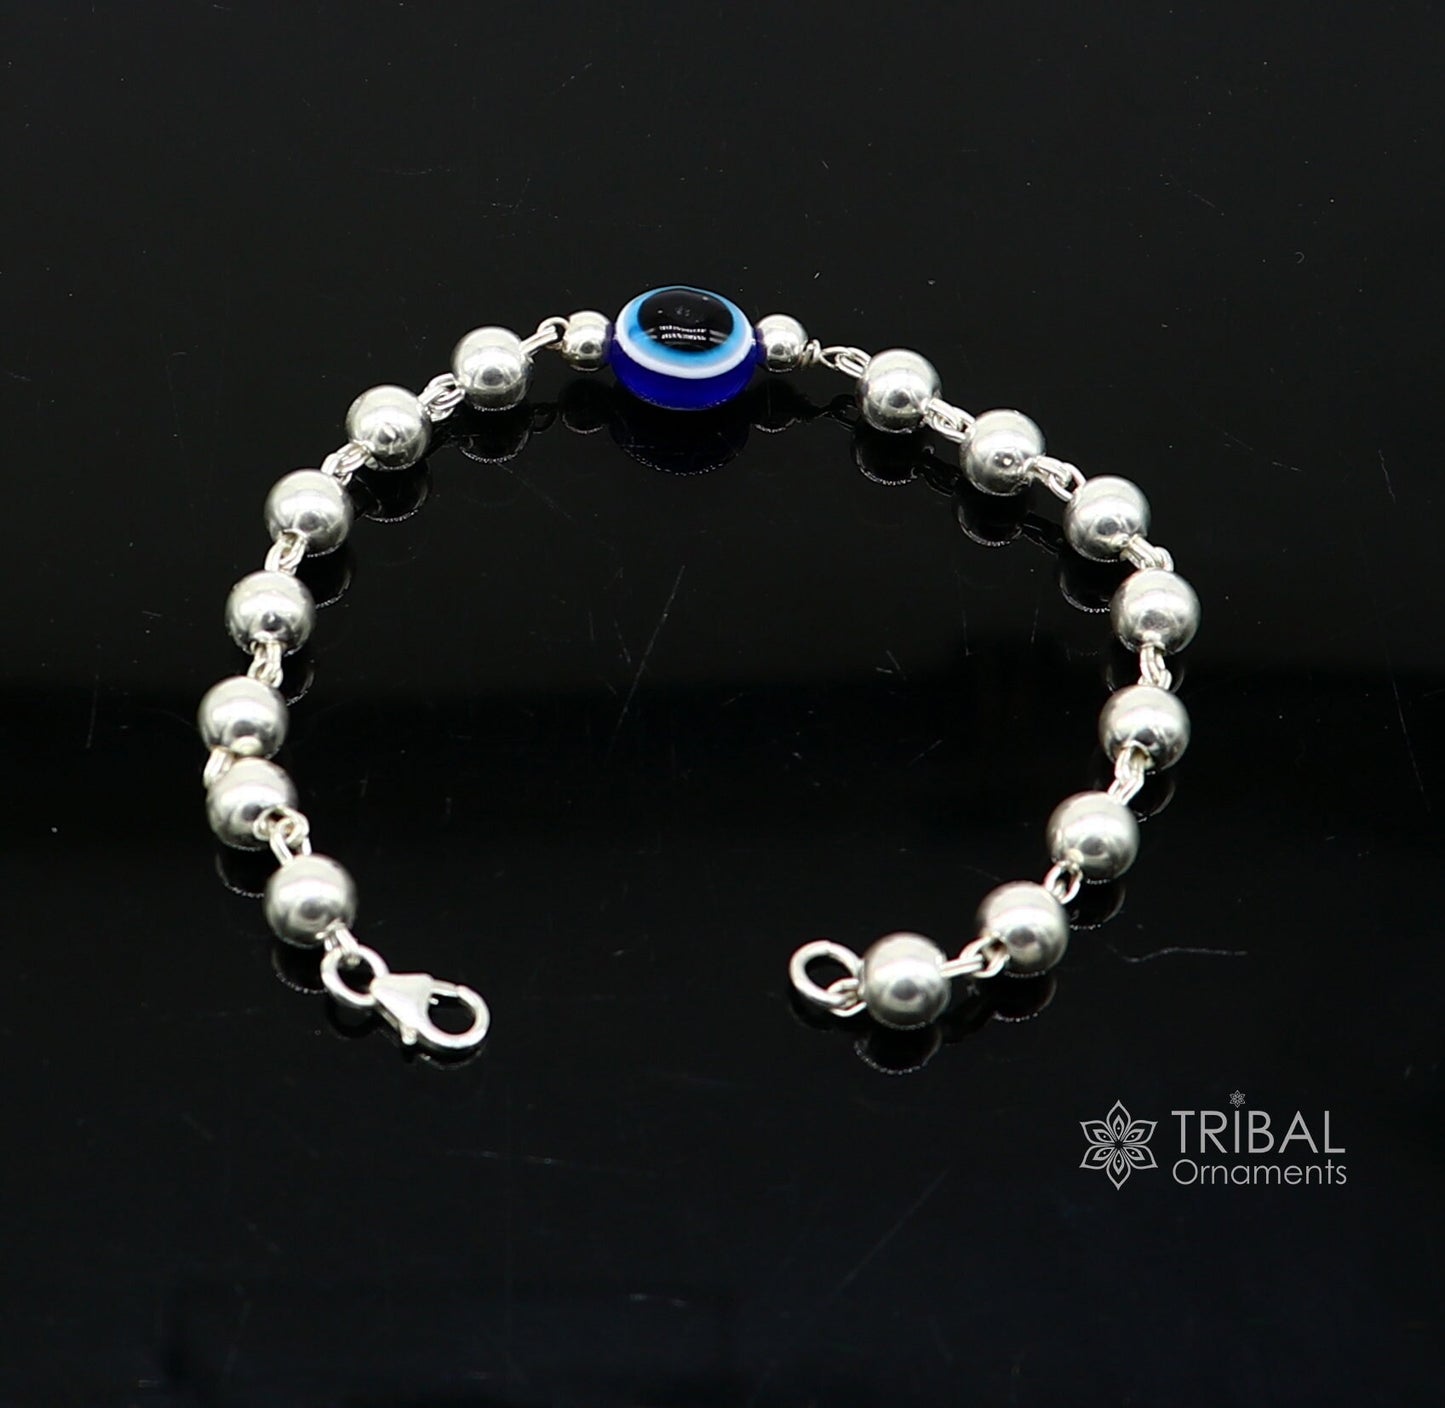 925 sterling silver handmade silver beaded evil eye bracelet, amazing stylish unisex cultural trendy bracelet all sizes jewelry sbr467 - TRIBAL ORNAMENTS